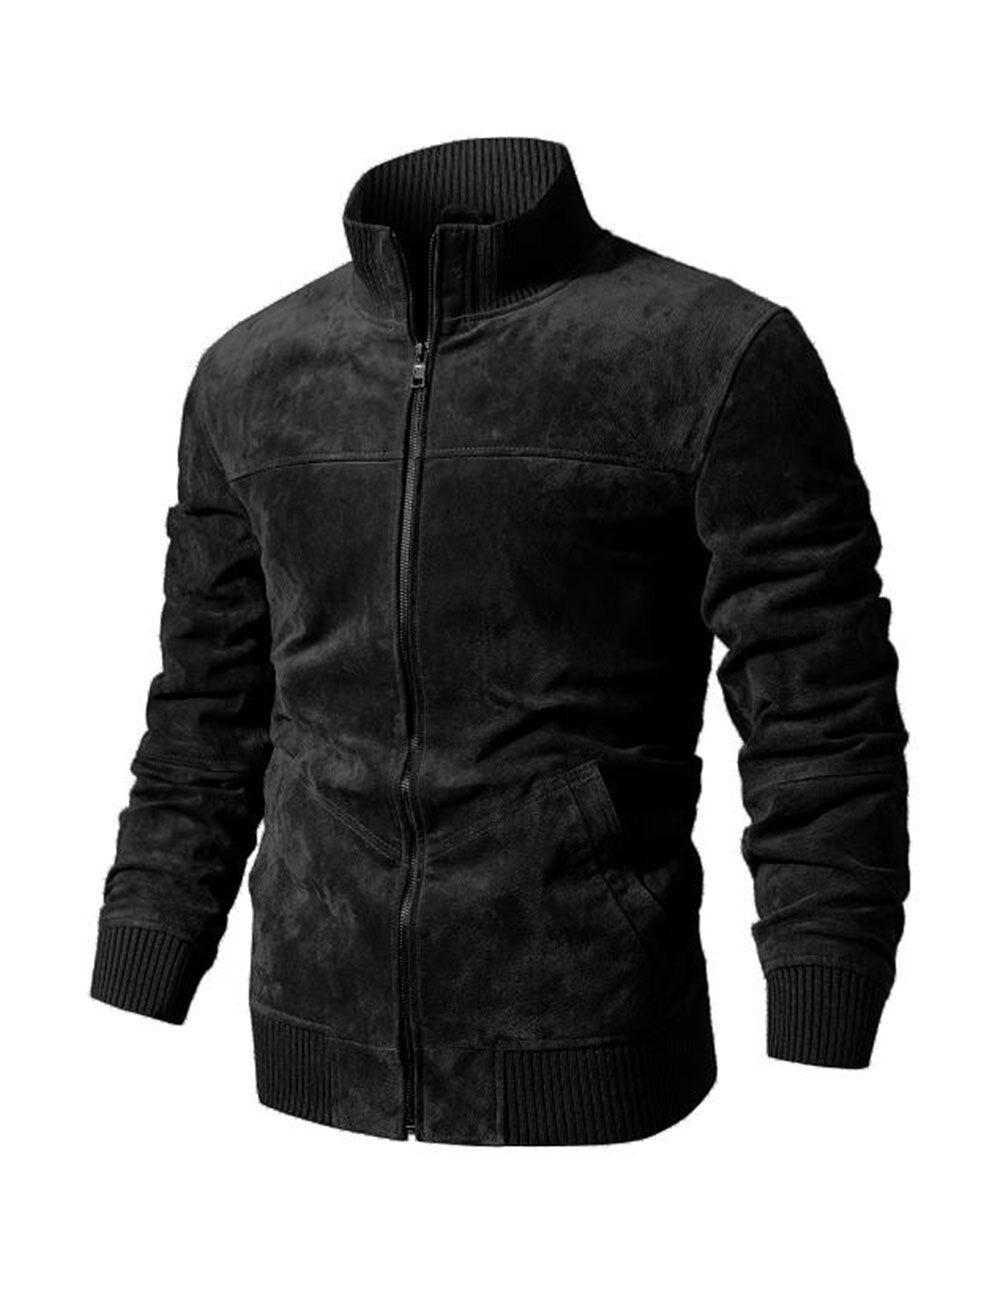 Men's Suede Leather Jacket Rib Trim Buy men's suede leather jacket rib trim| buy discount men's suede leather jacket rib trim